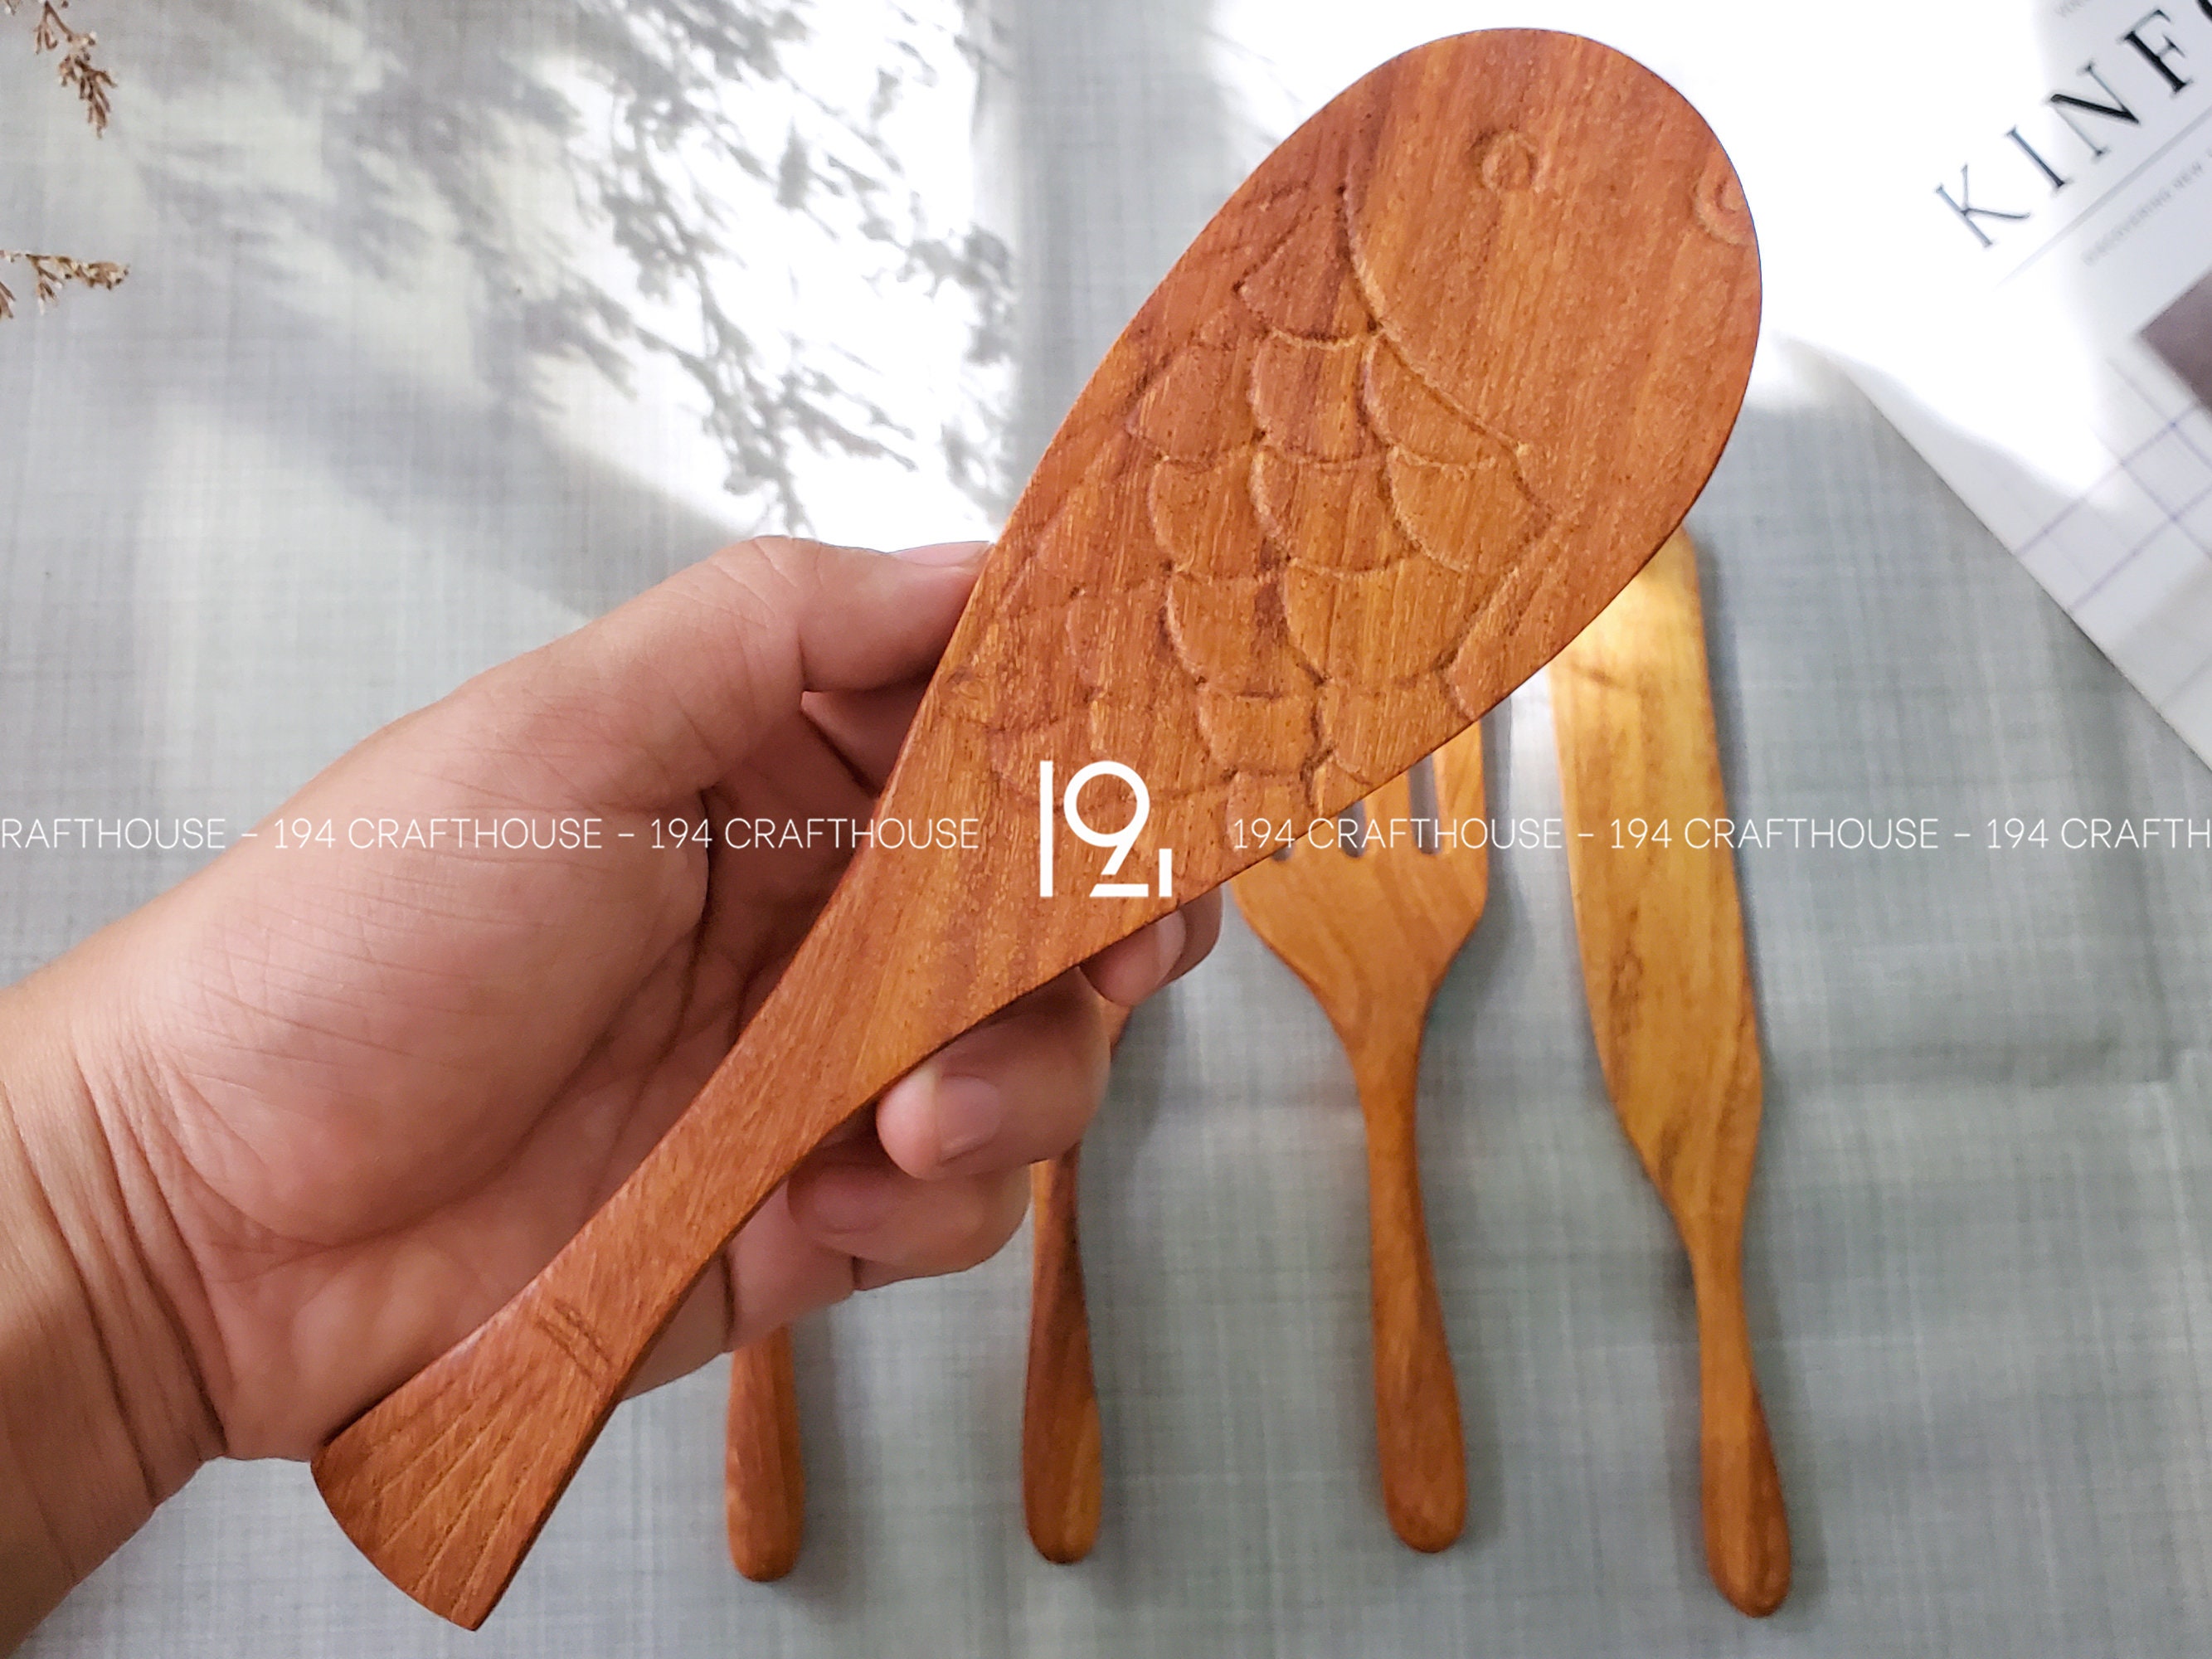 Japanese Hand-carved Wooden Rice Paddle Shamoji Vtg Large Spoon